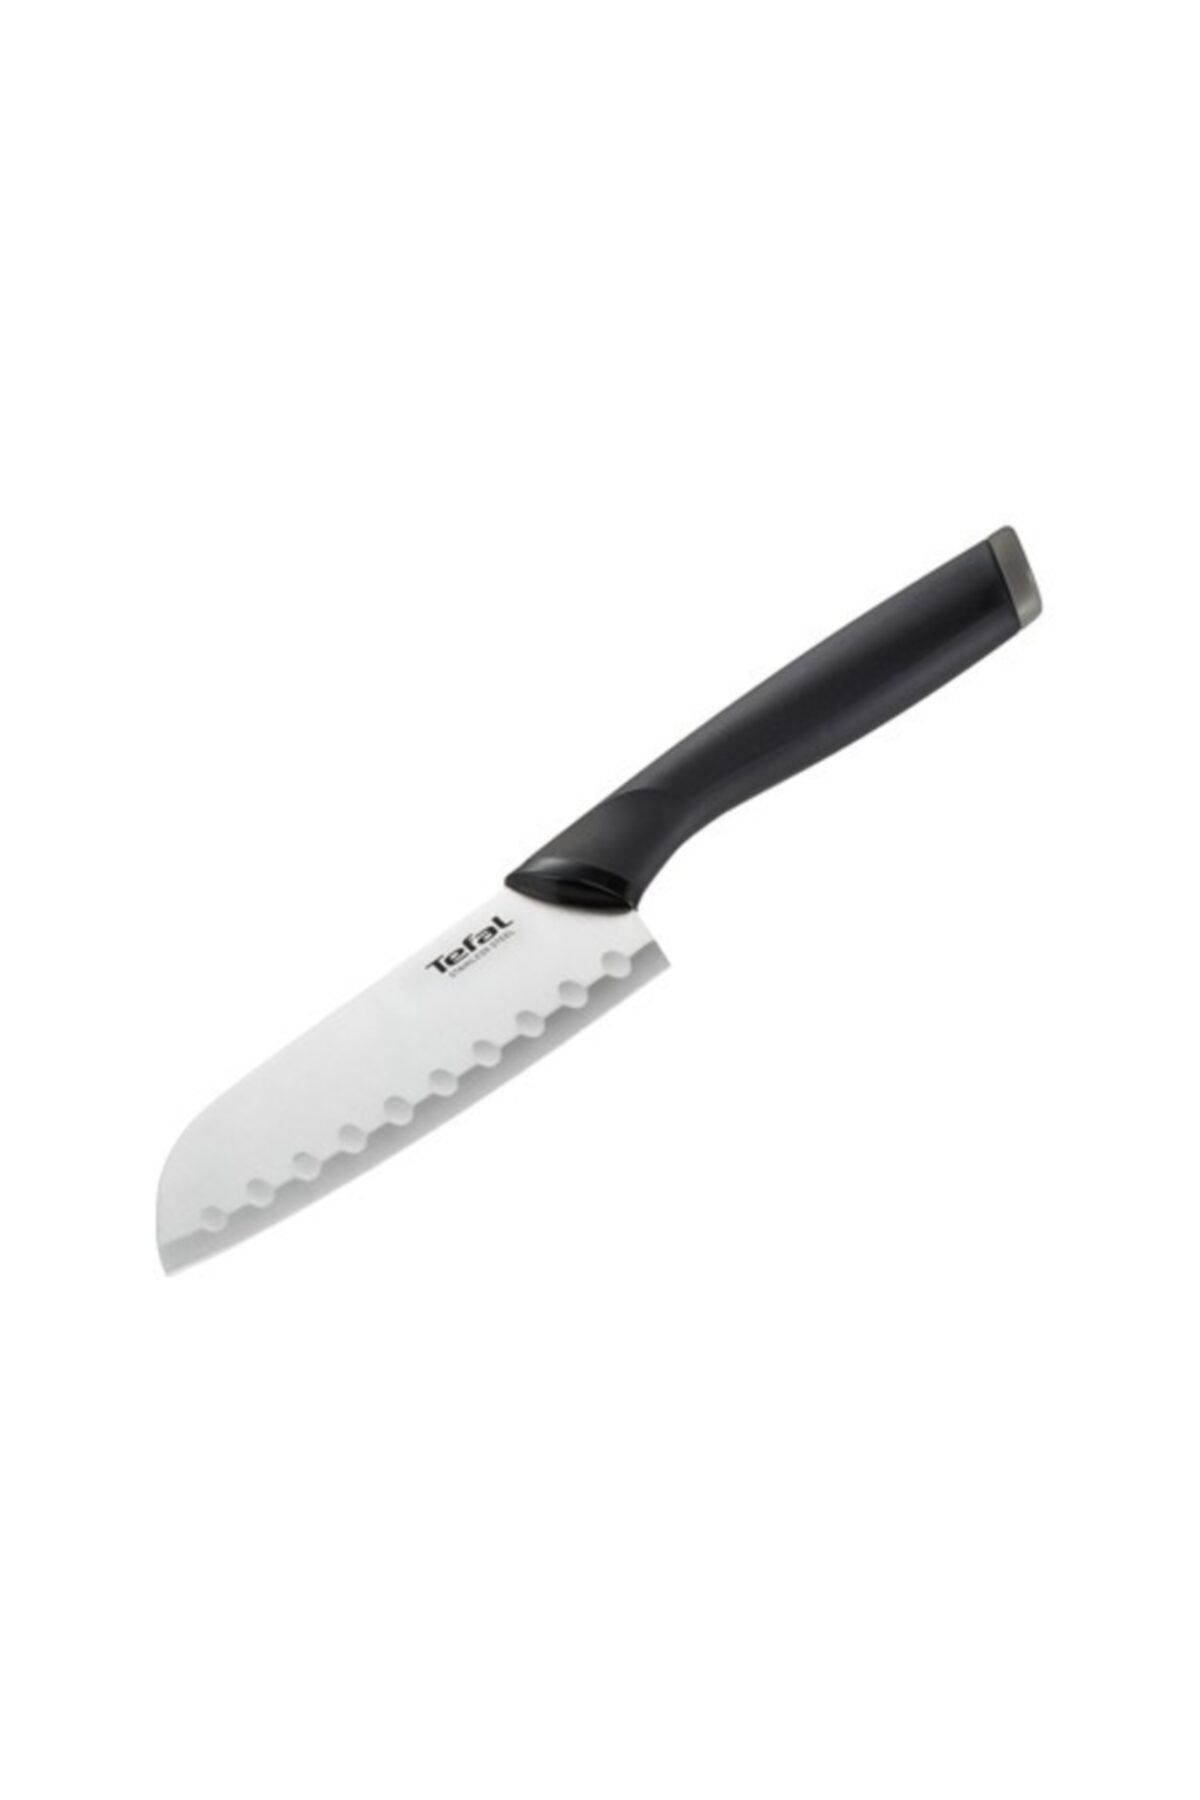 TEFAL Mutfak Bıçağı 12 Cm Nb-003